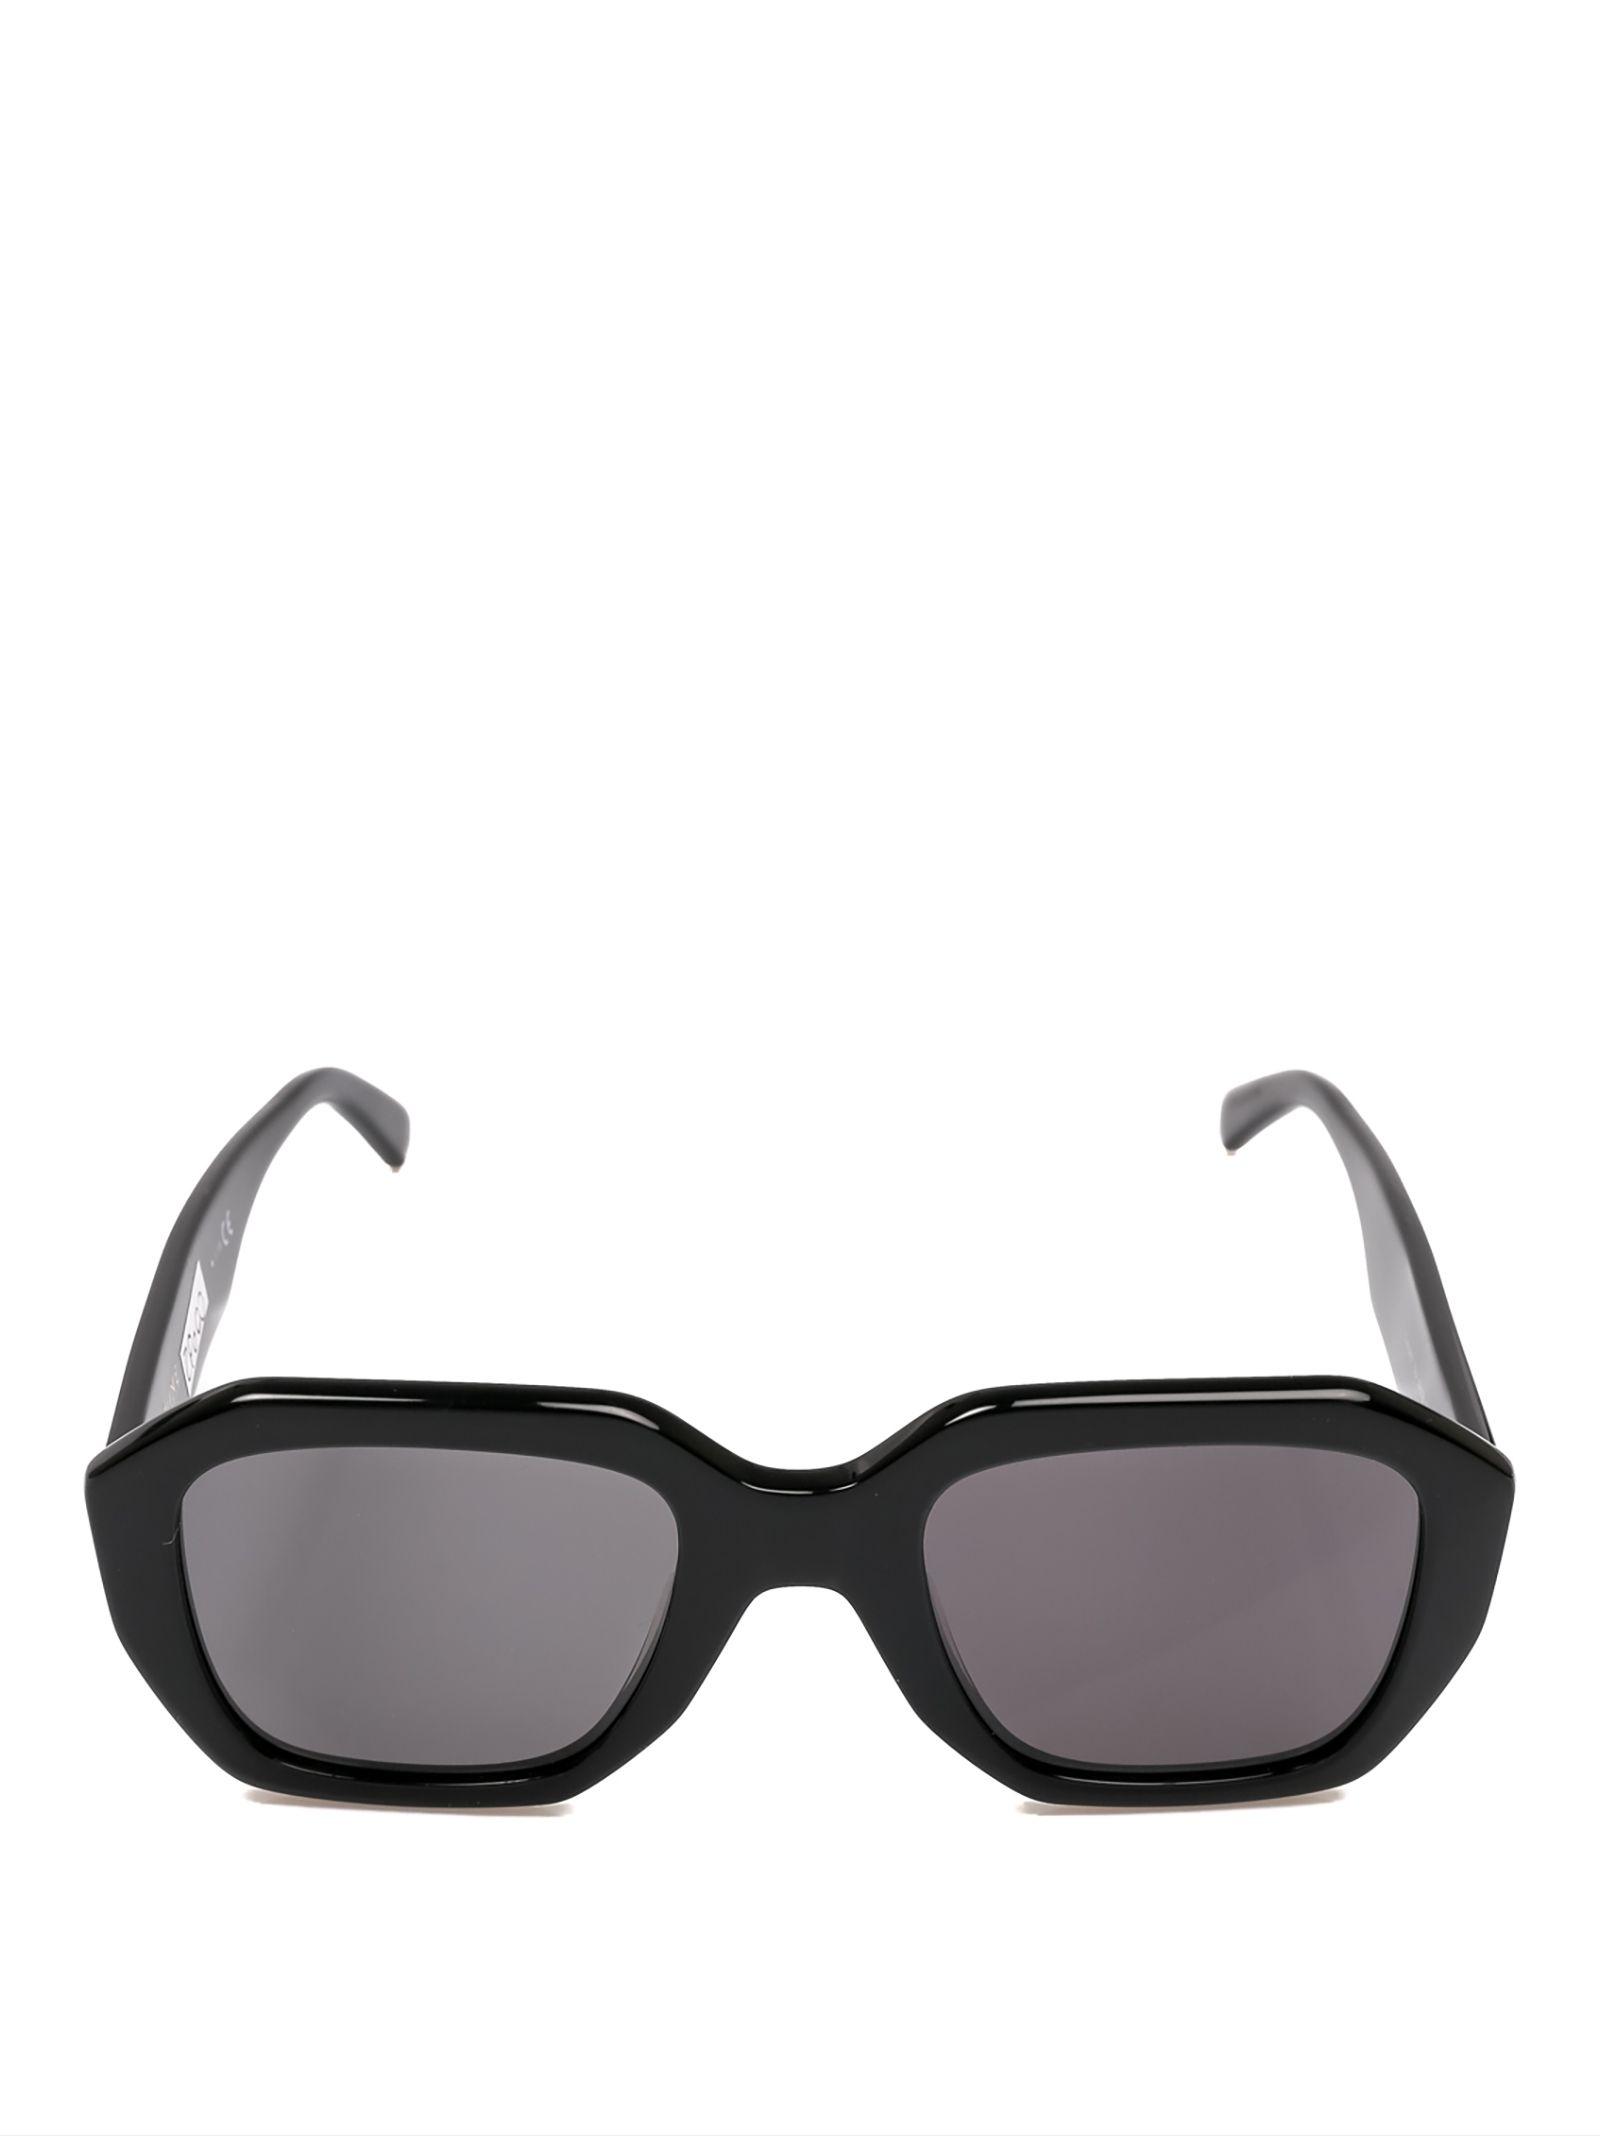 Céline Black Acetate Sunglasses in Black - Lyst